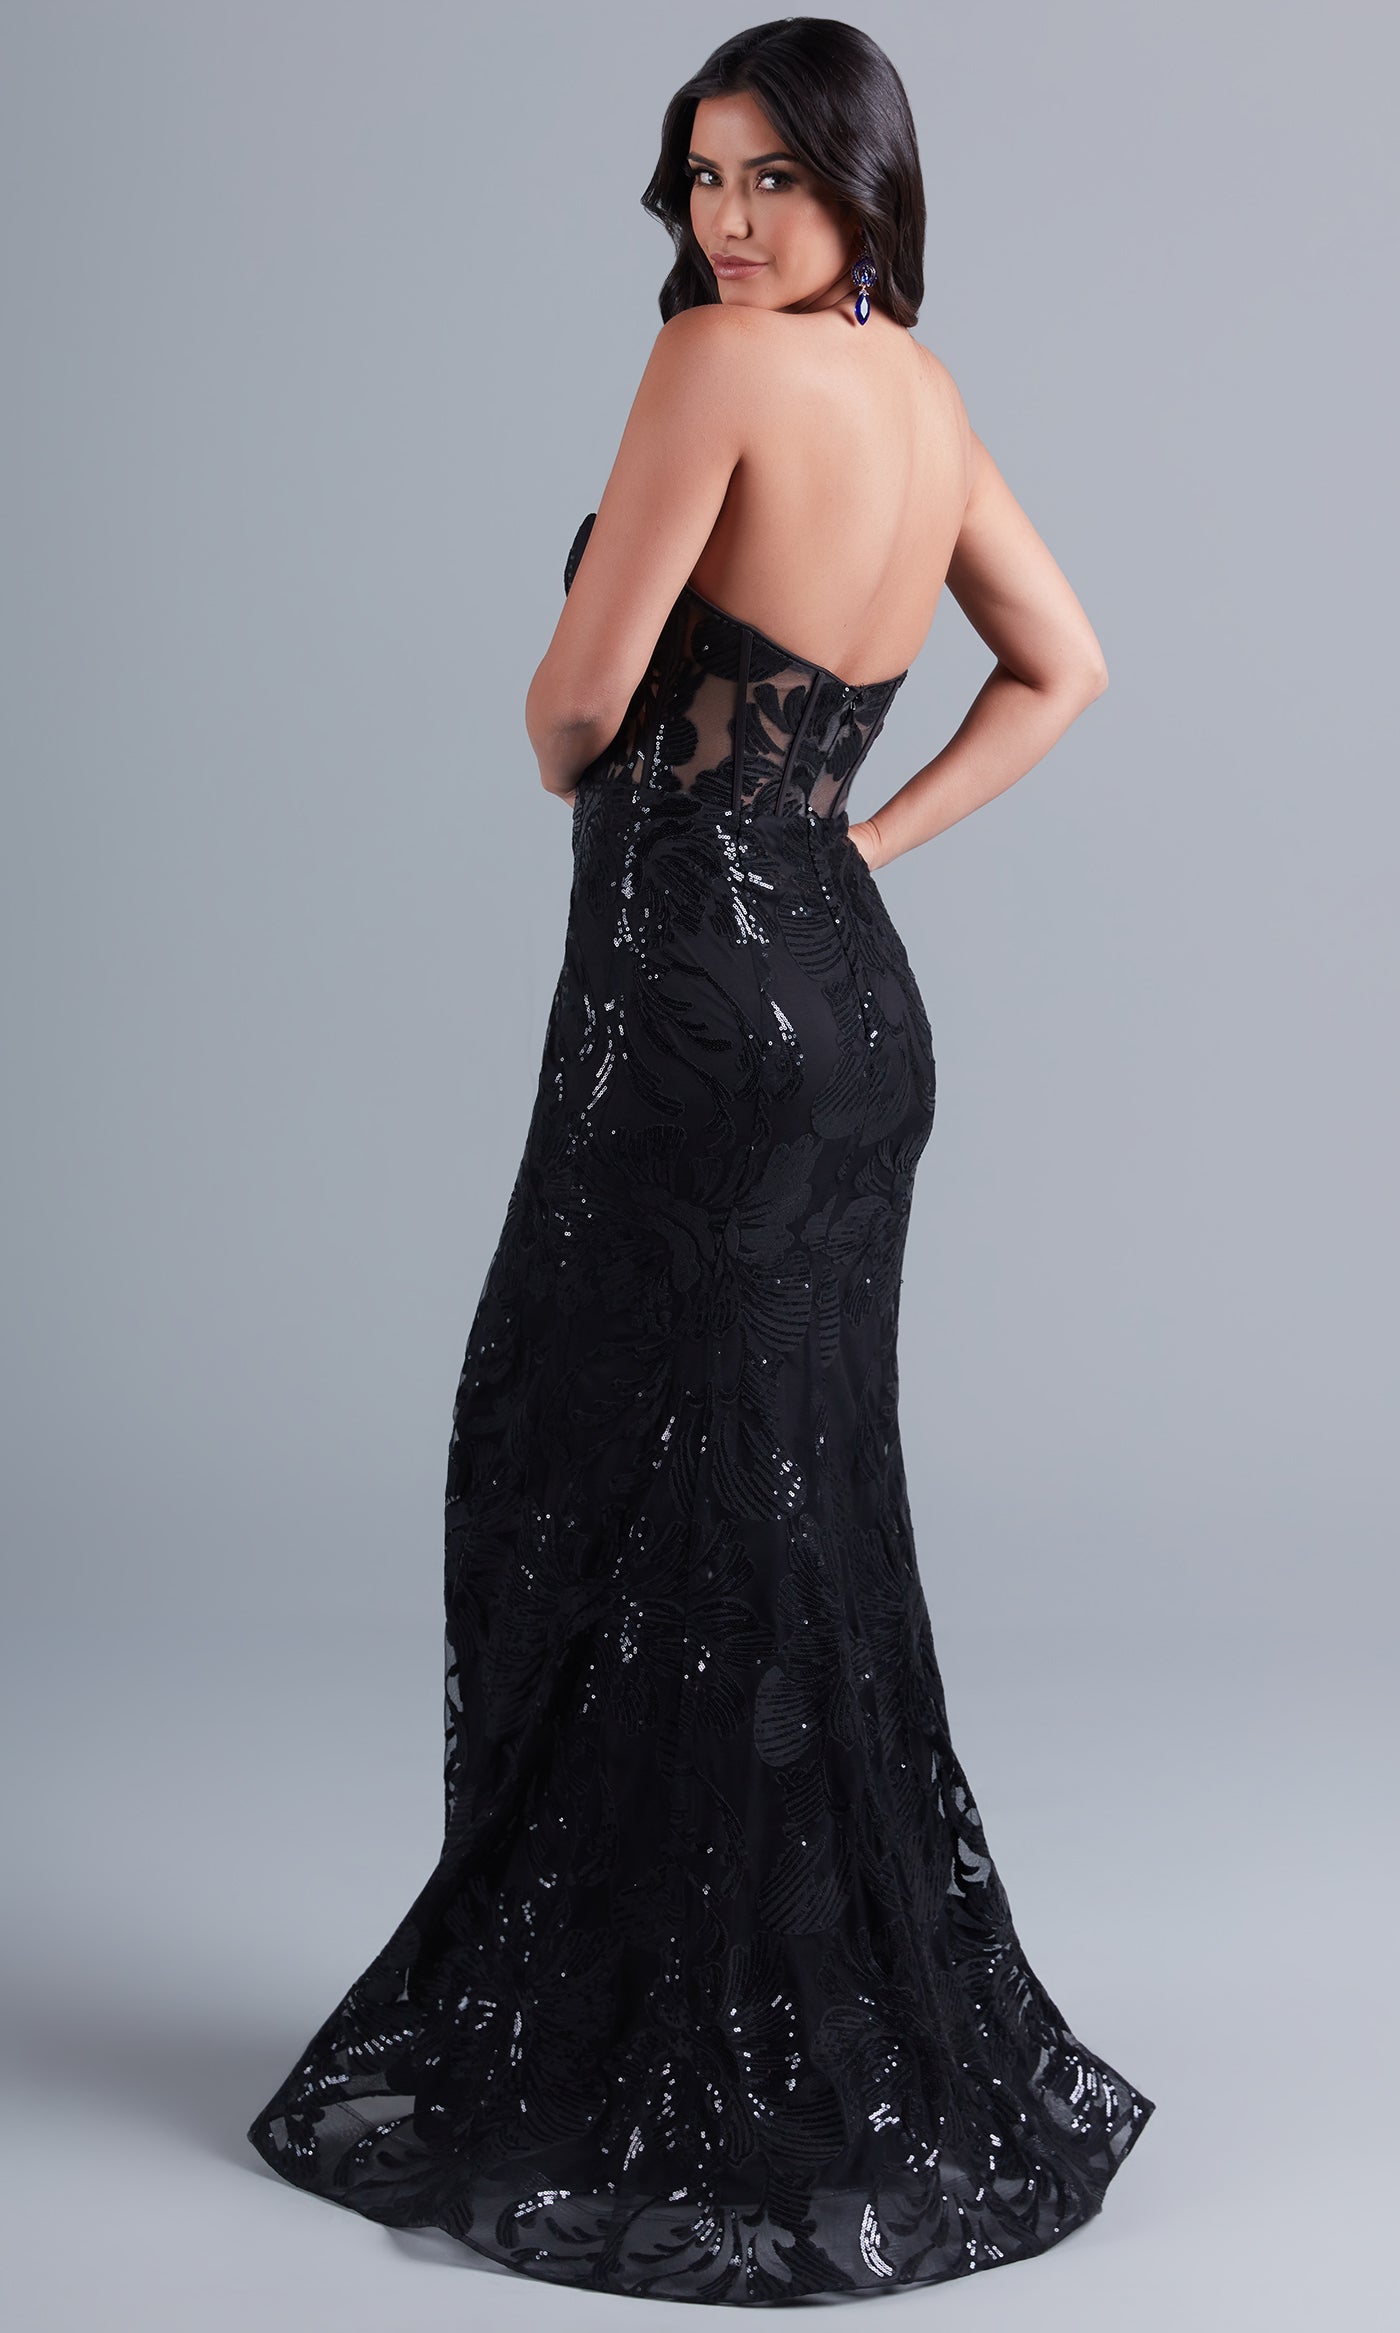  Strapless Long Black Sequin Formal Prom Dress